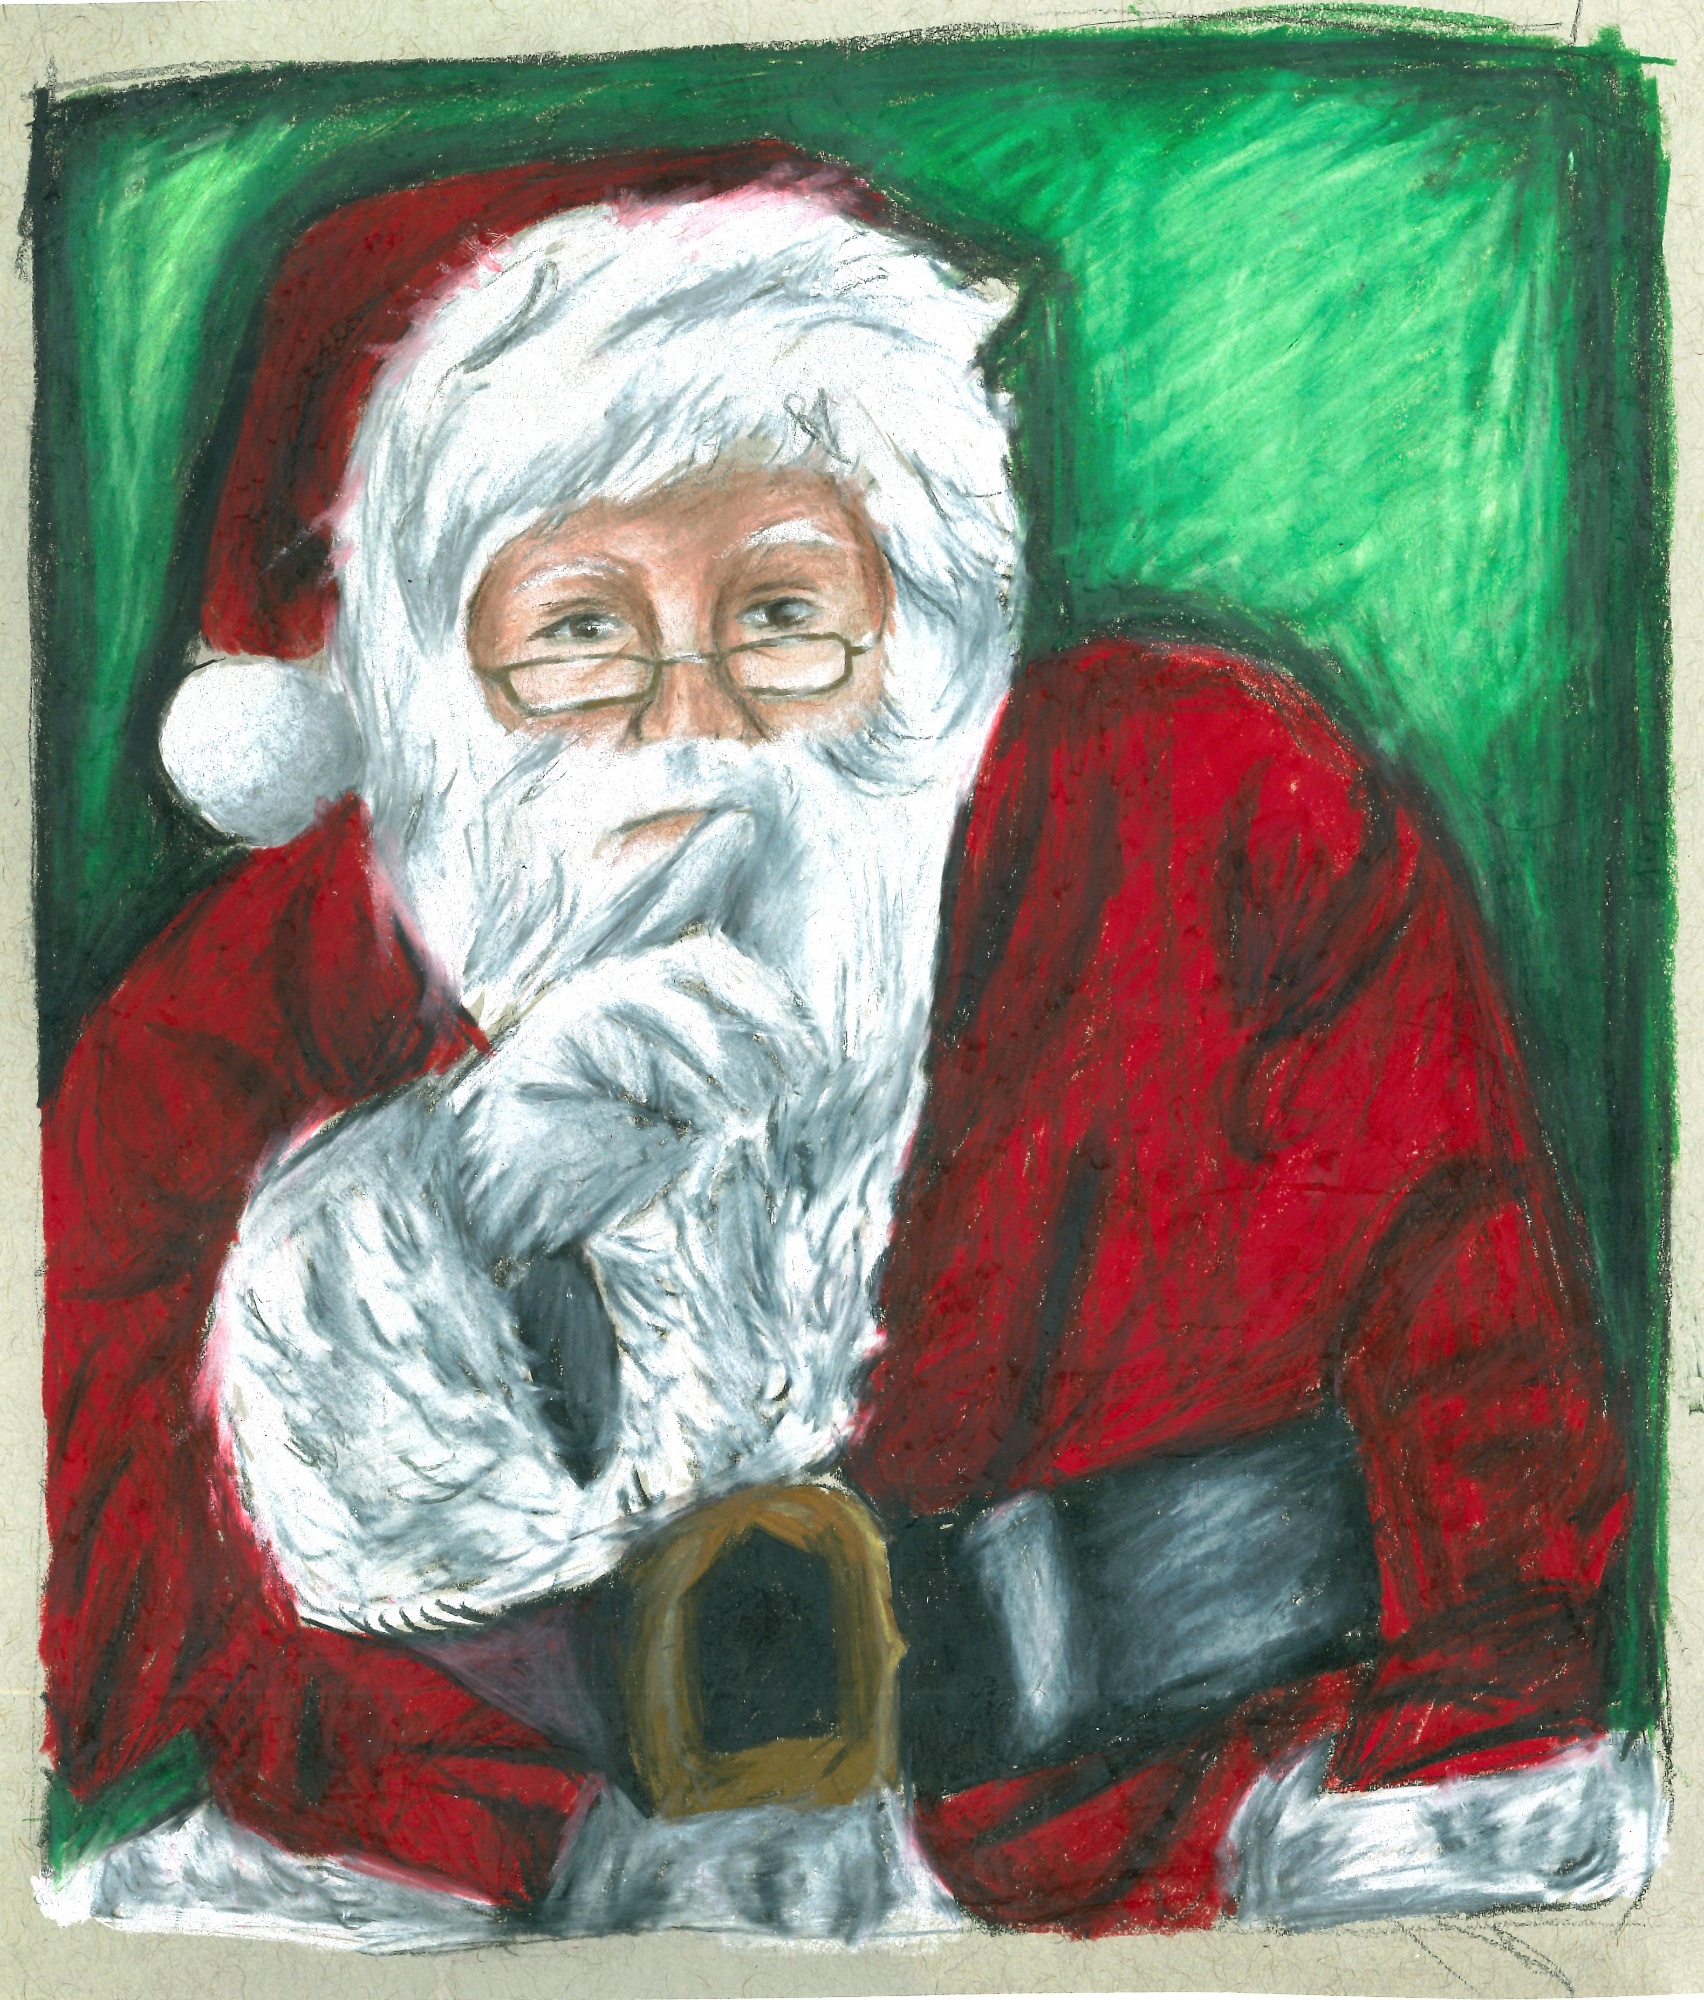 Nancy L's Winning Christmas Card of Santa 